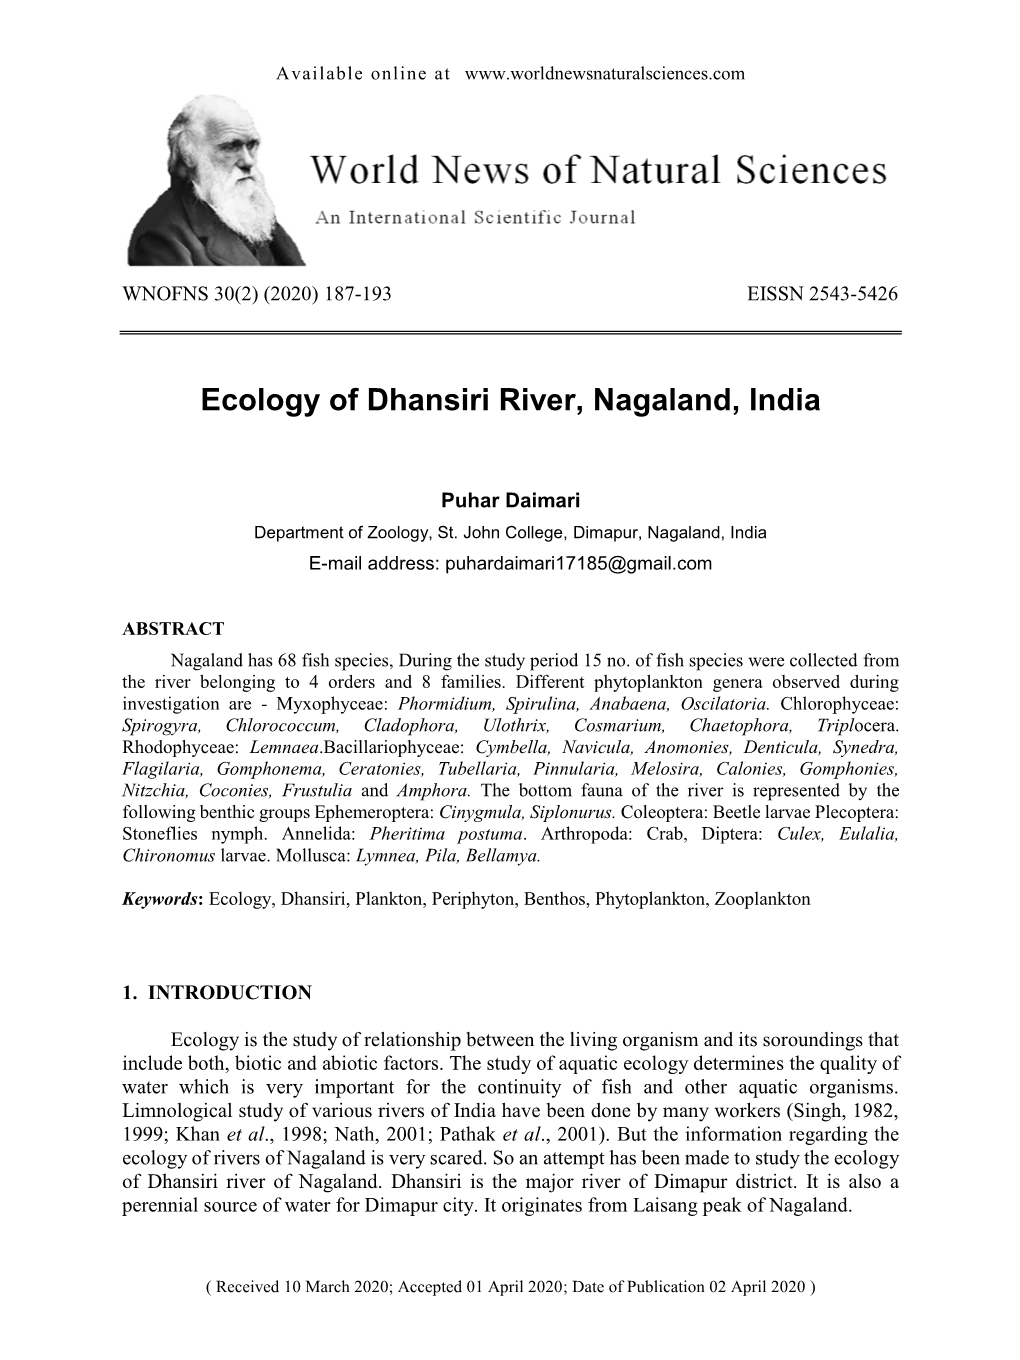 Ecology of Dhansiri River, Nagaland, India